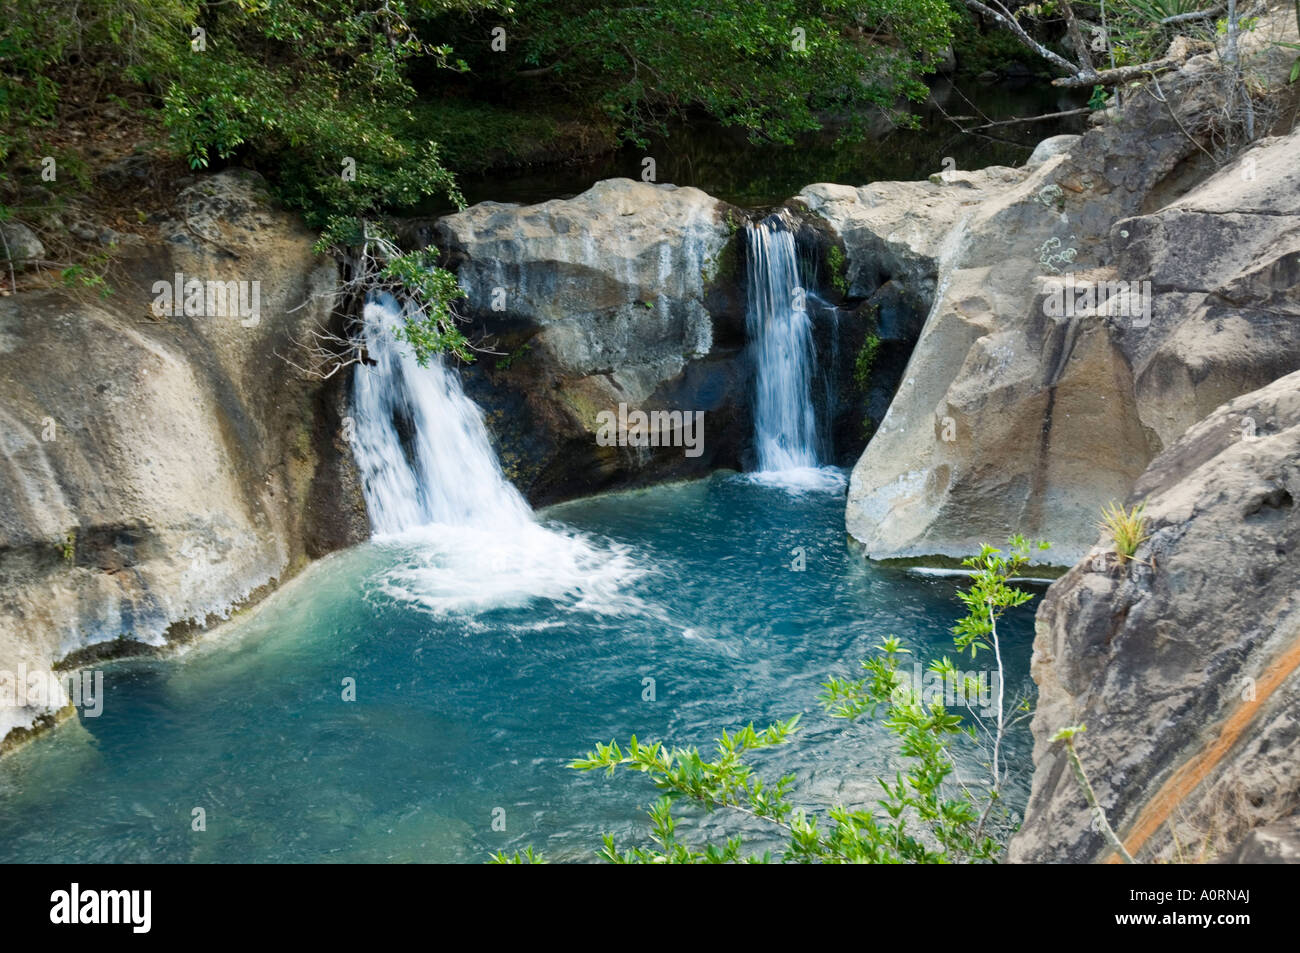 Waterfall hacienda guachipelin rincon de hi-res stock photography and  images - Alamy